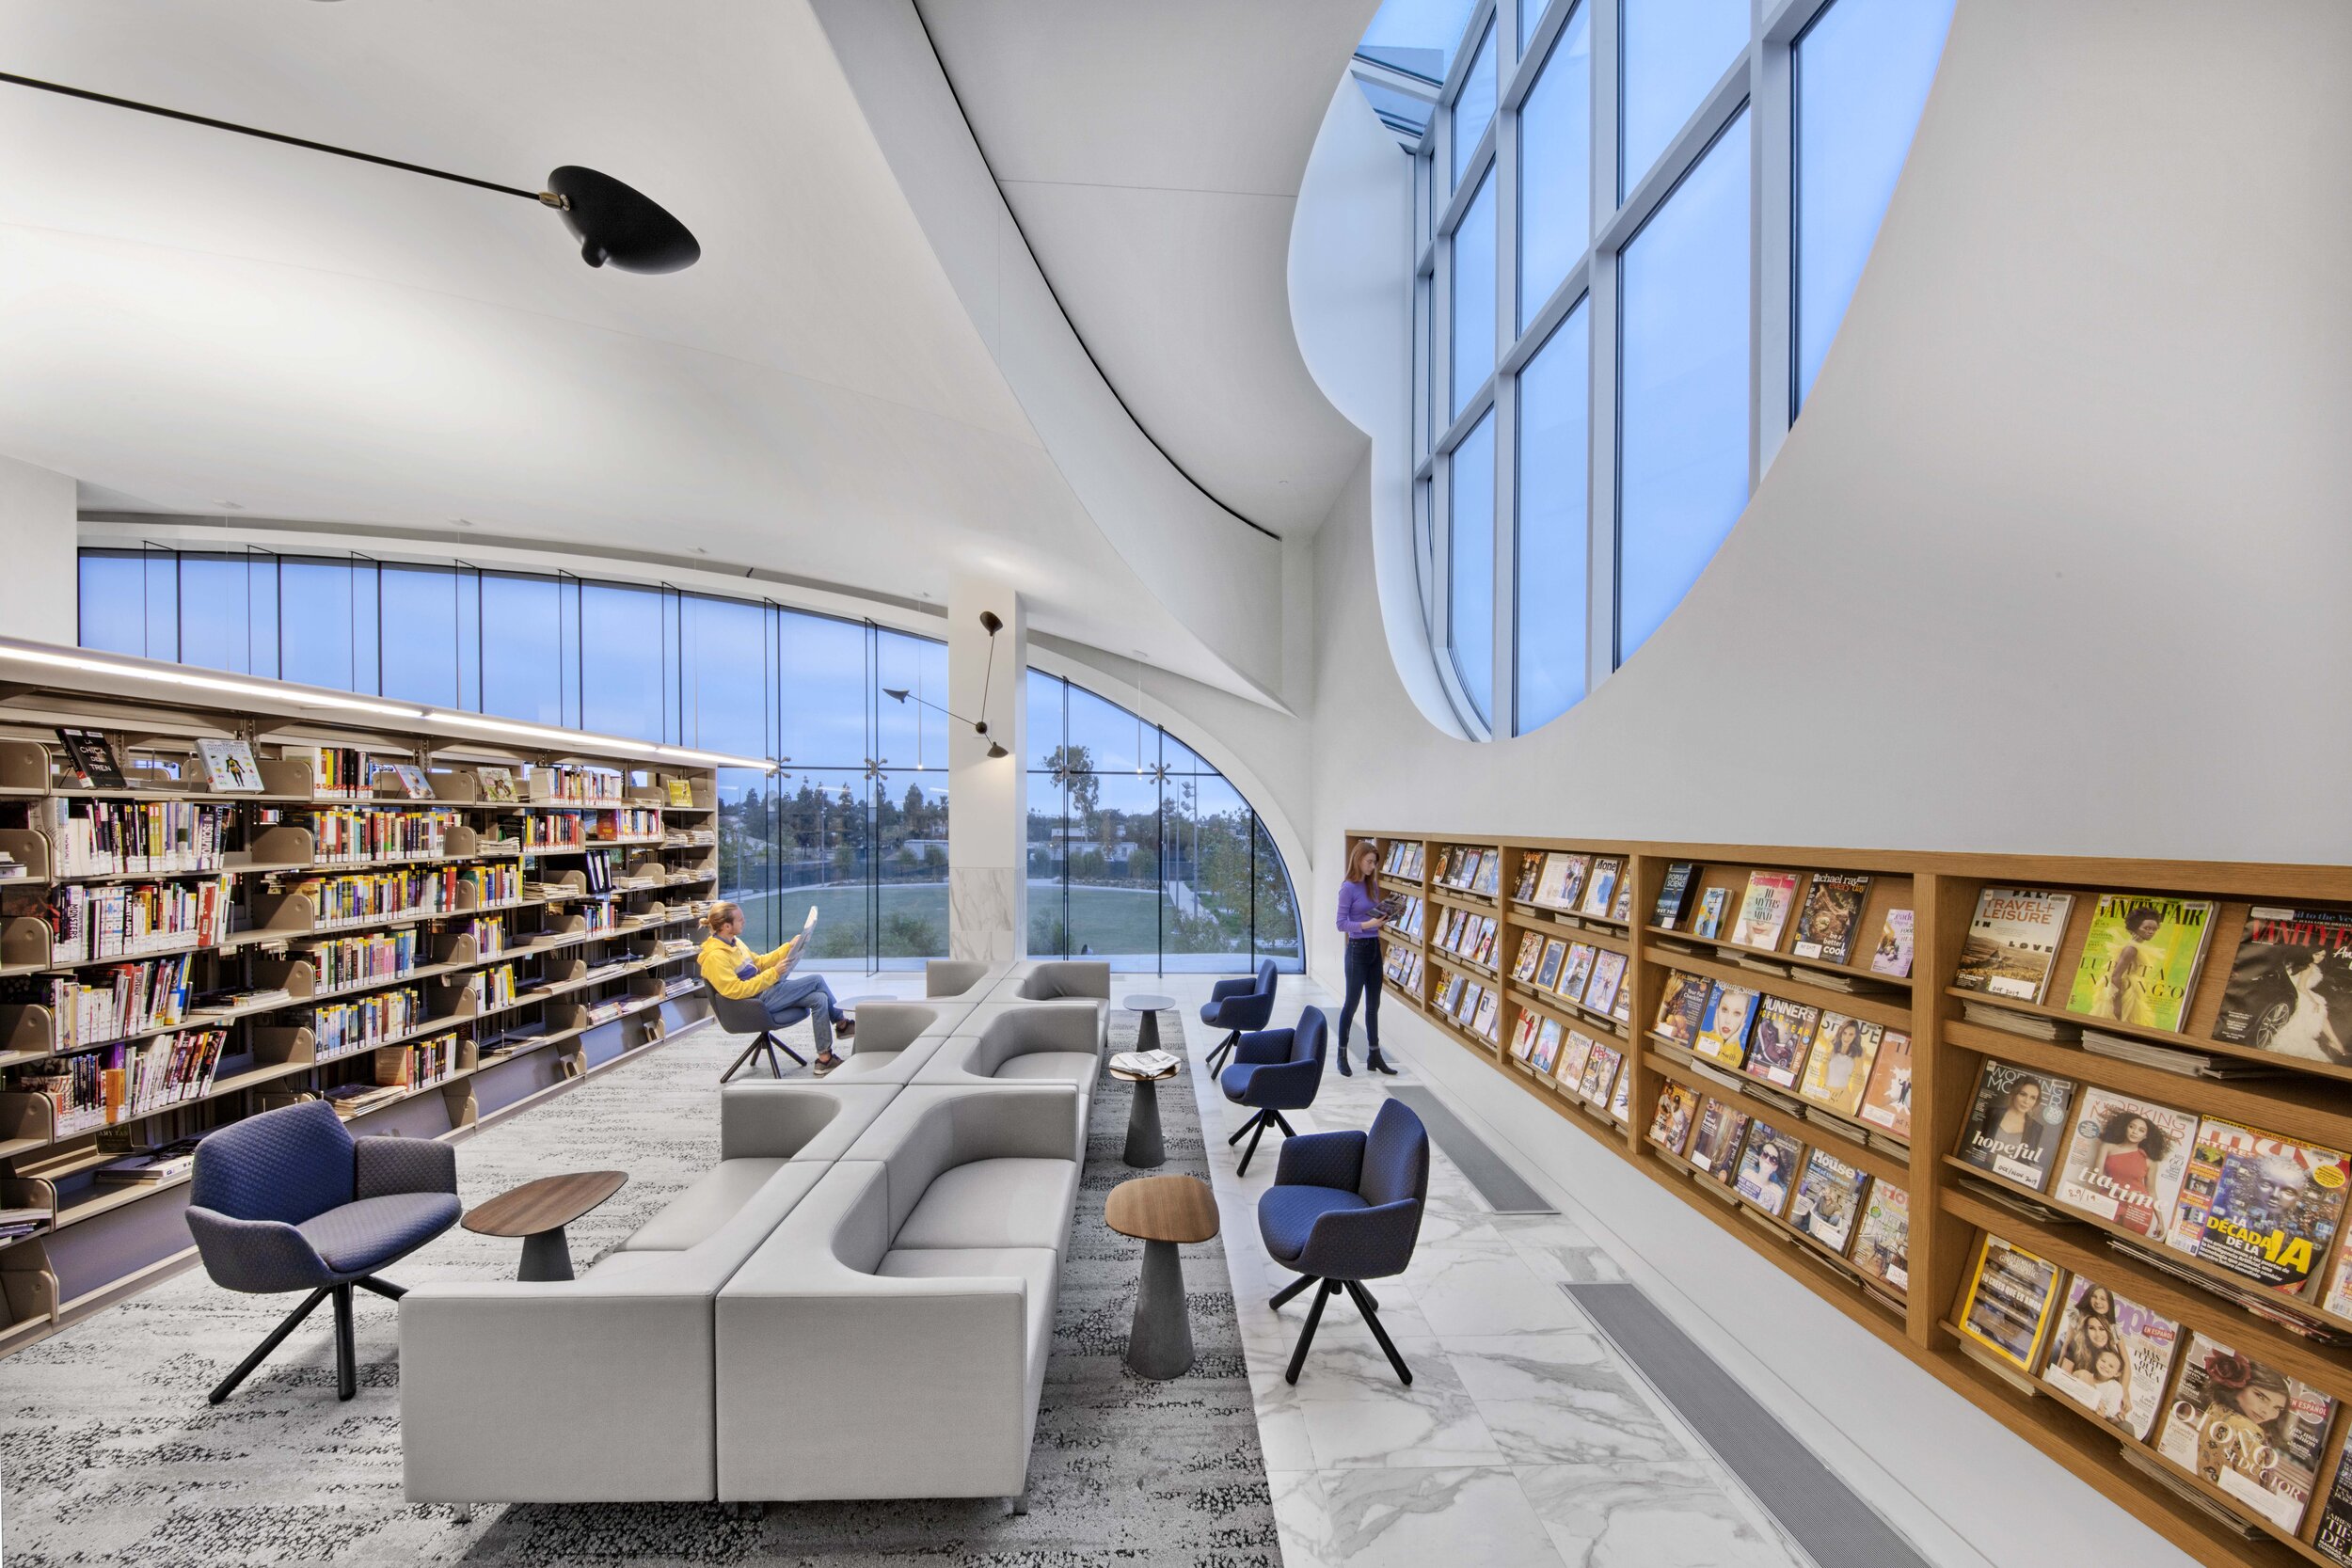 Costa Mesa Public Library 2019 (156).jpg